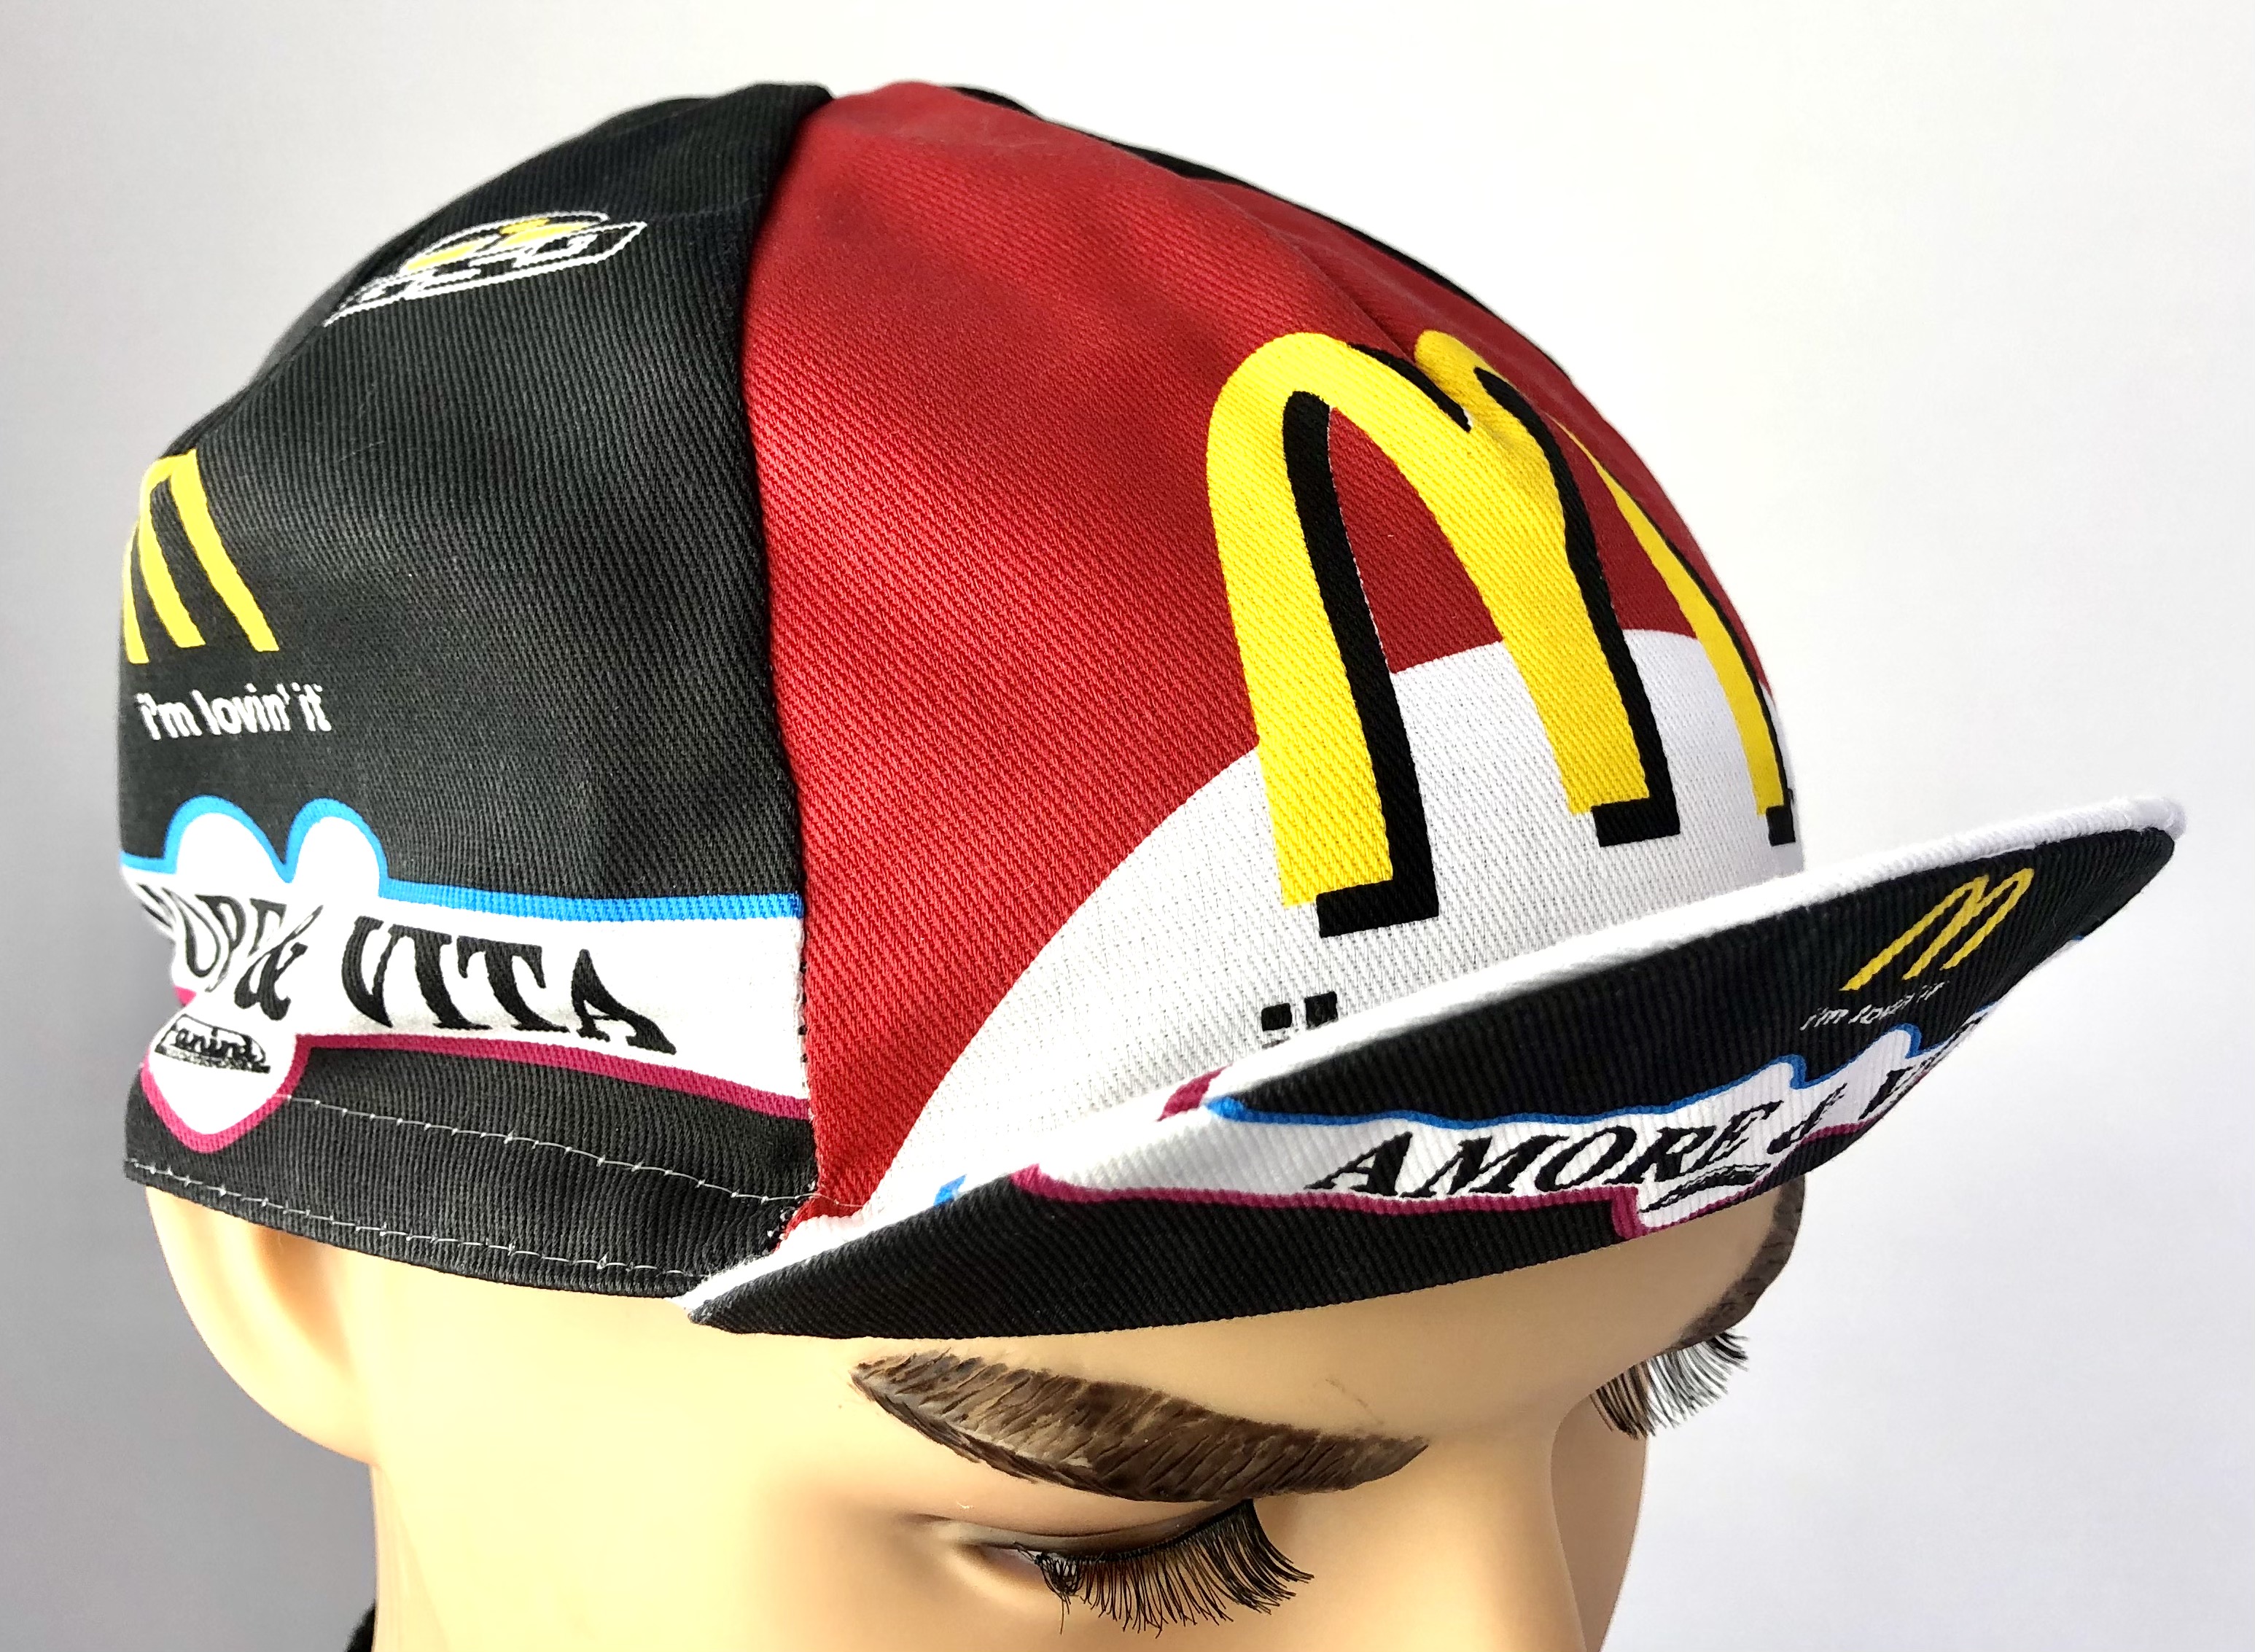 Retro Radsportmütze Team Amore & Vita - McDonald's